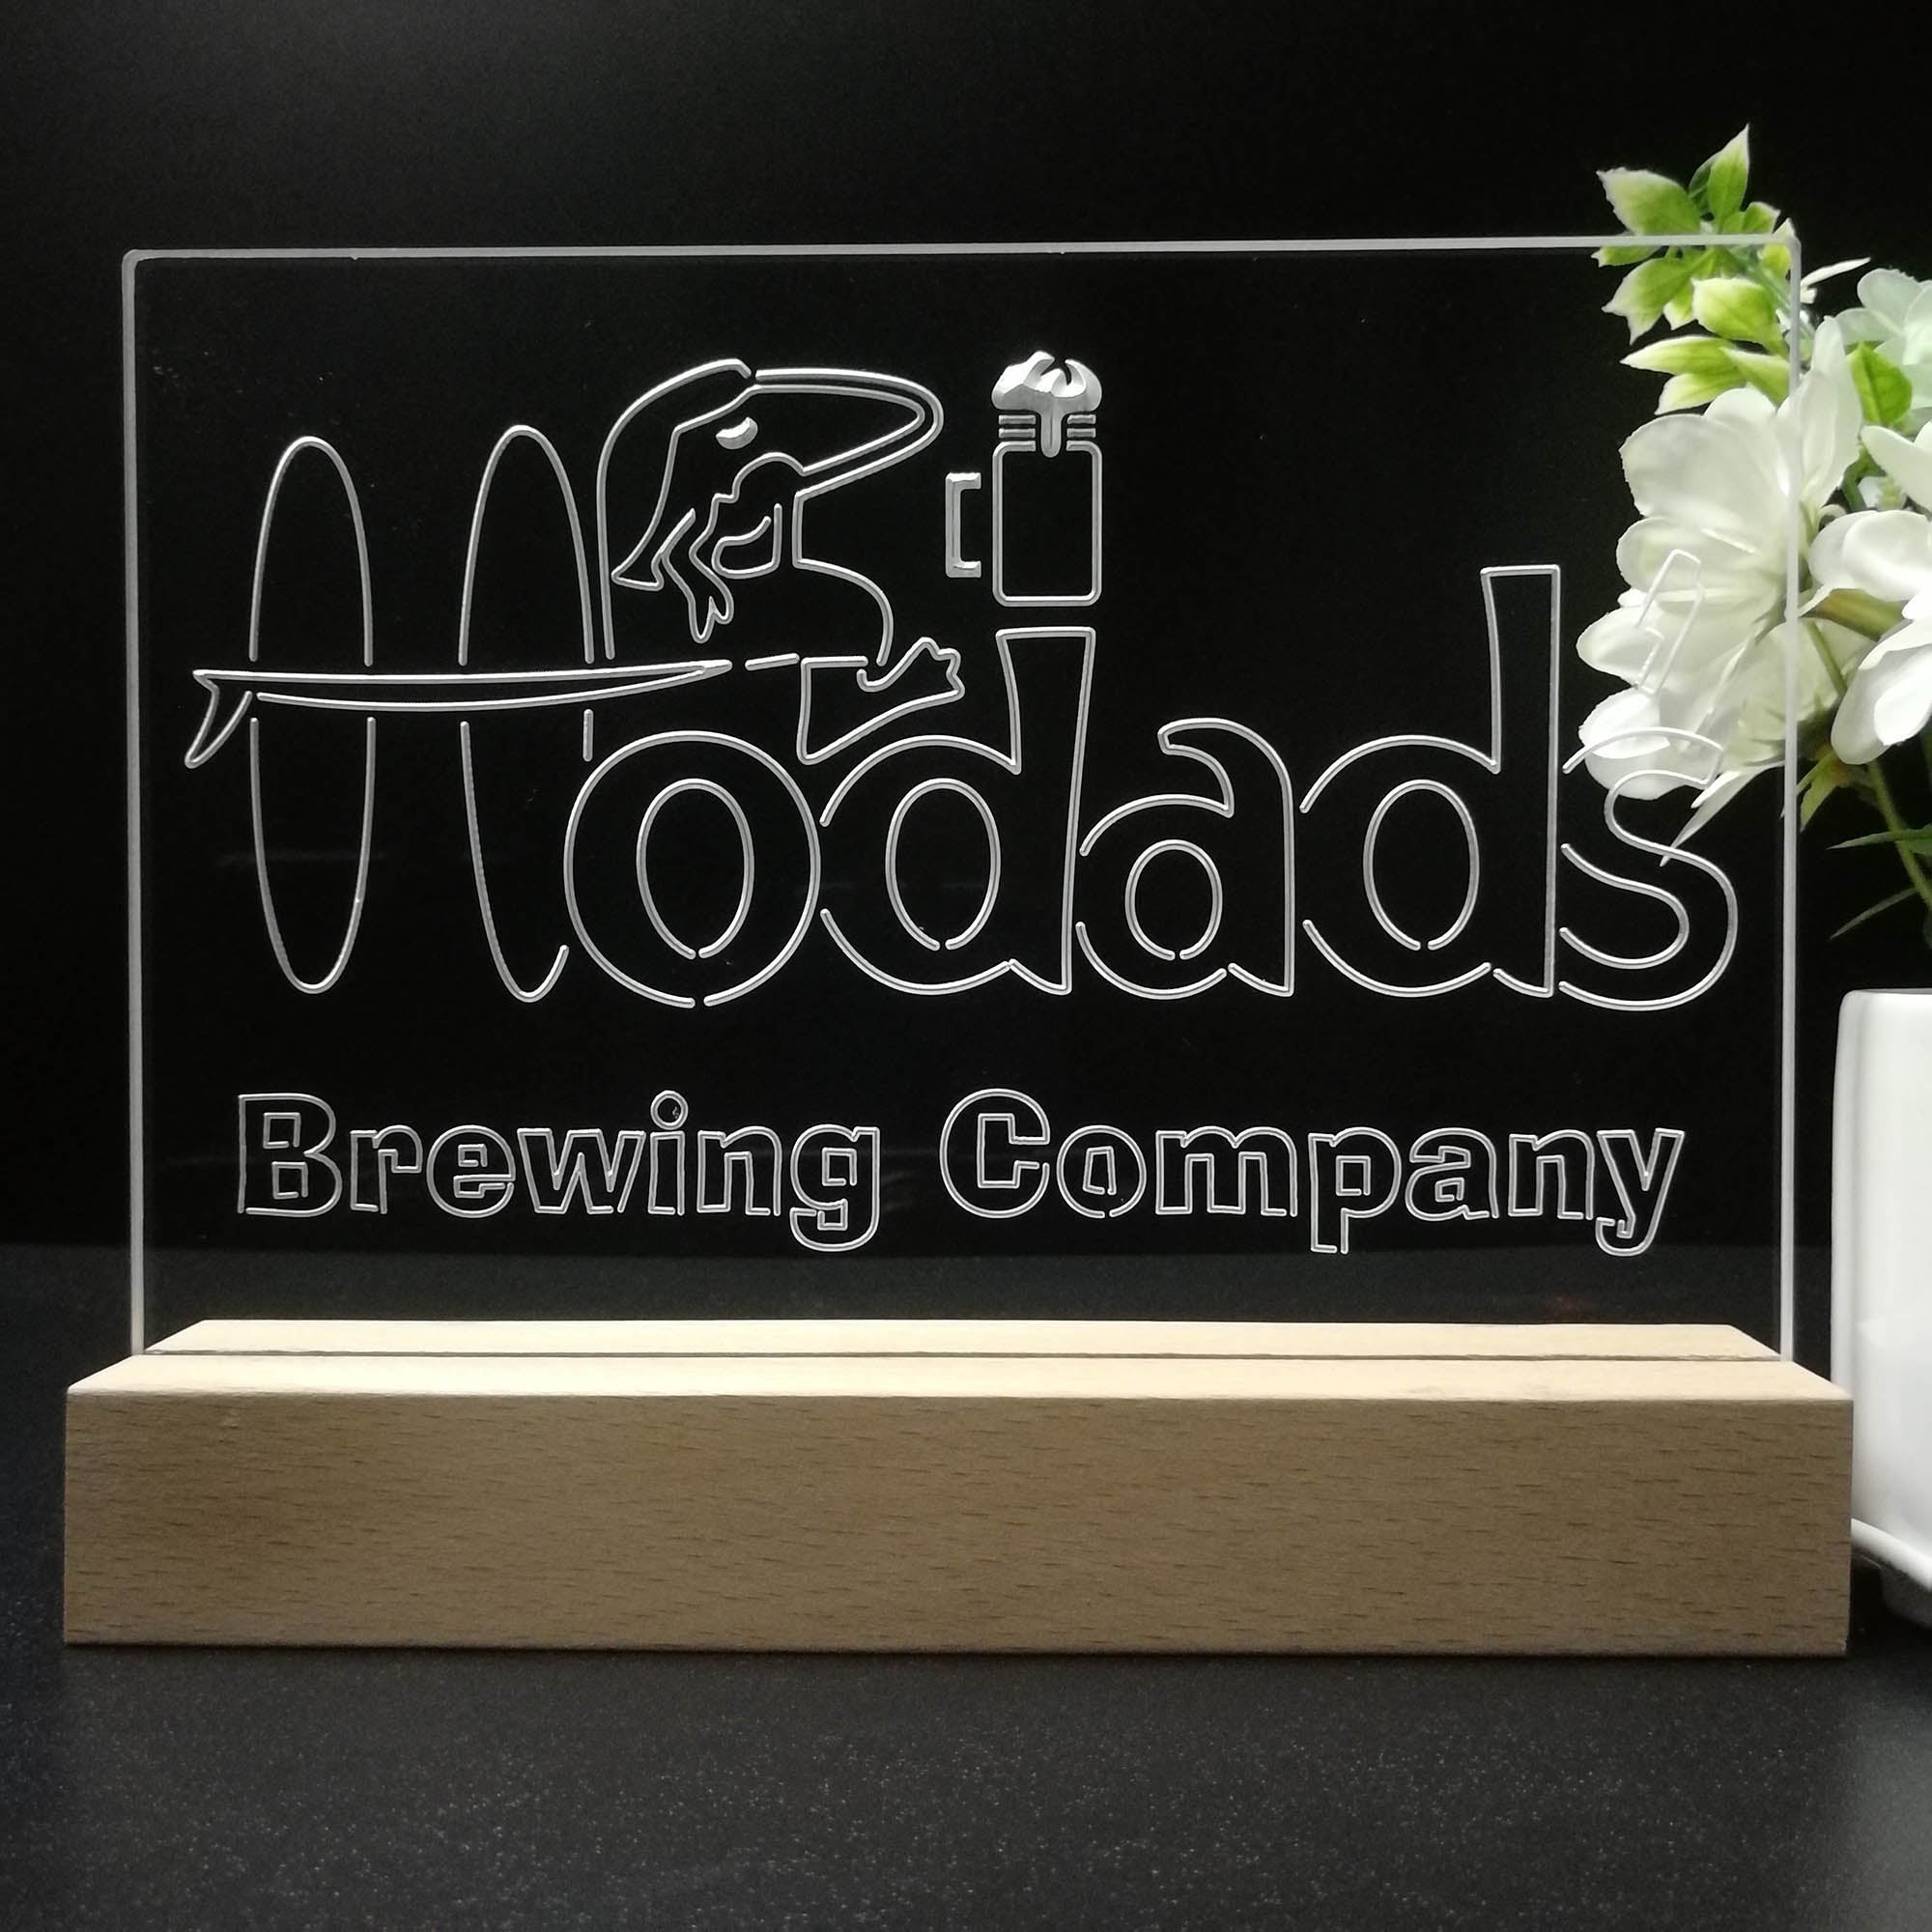 Hodad's Brewing Co. Neon Sign Pub Bar Decor Lamp